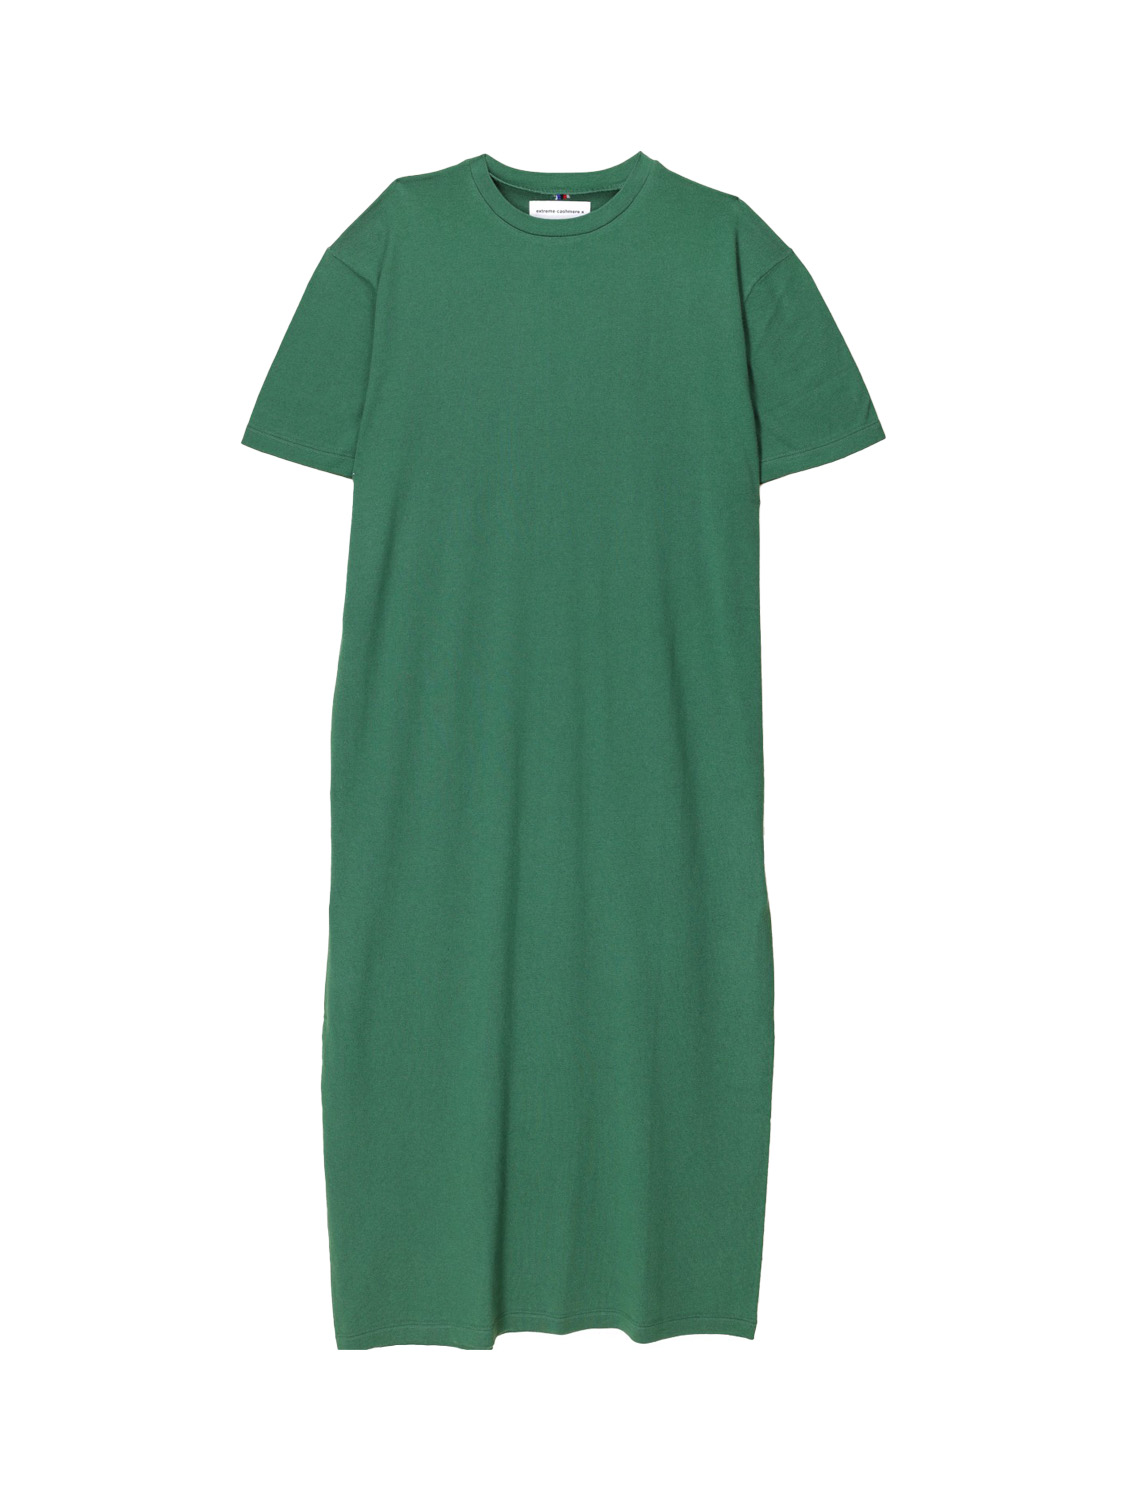 Extreme Cashmere N°321 Kris - Vestido camisero oversize en mezcla de cachemira y algodón verde Talla única